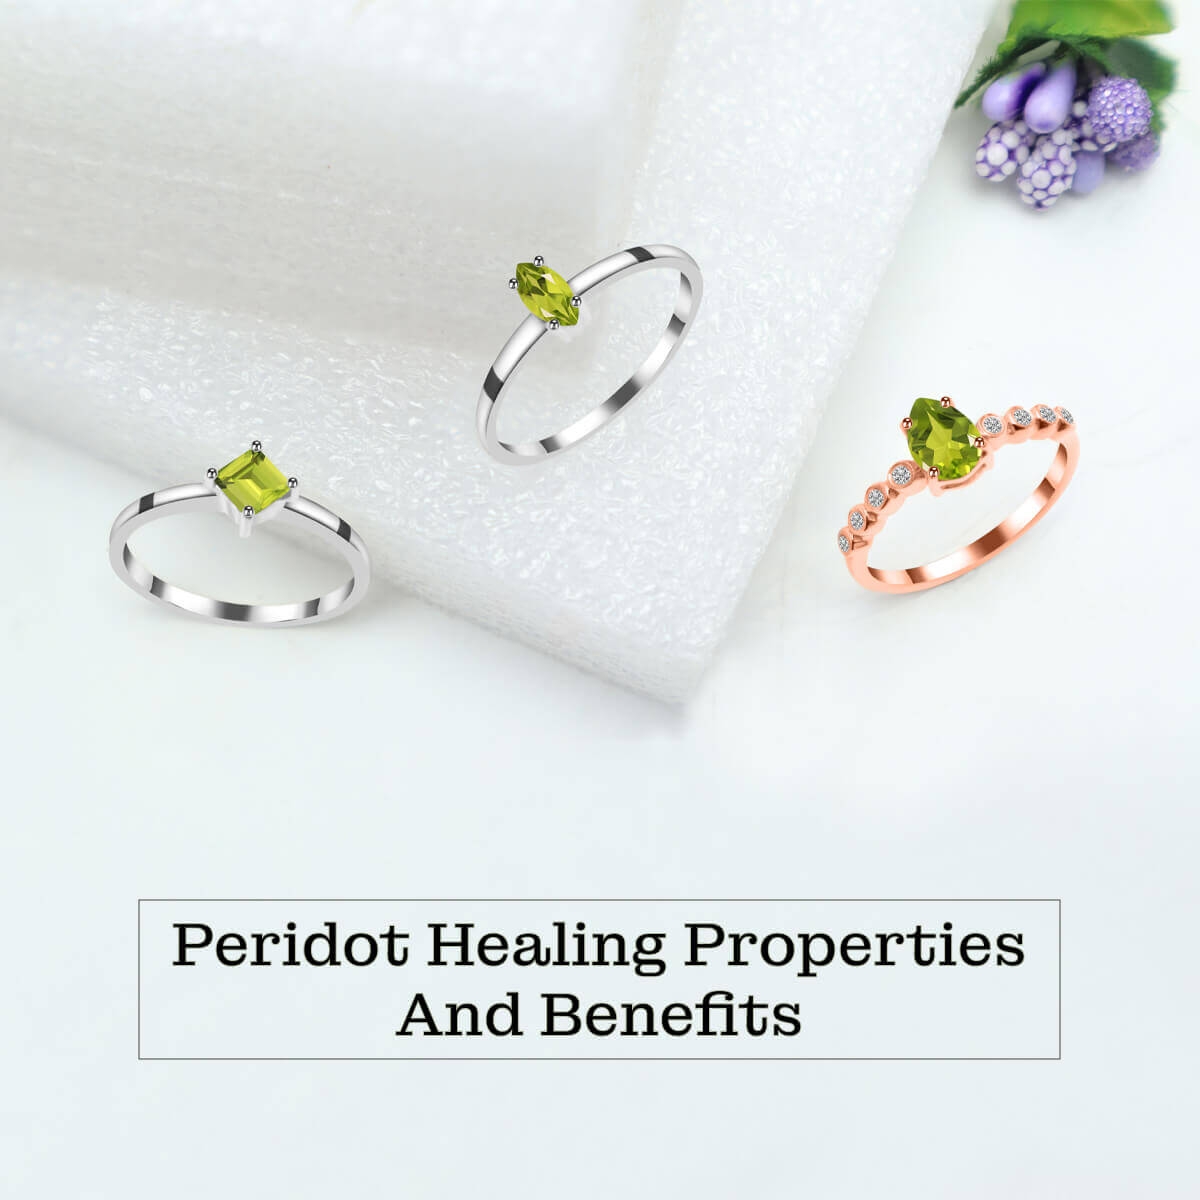 Peridot Healing Properties And Benefits